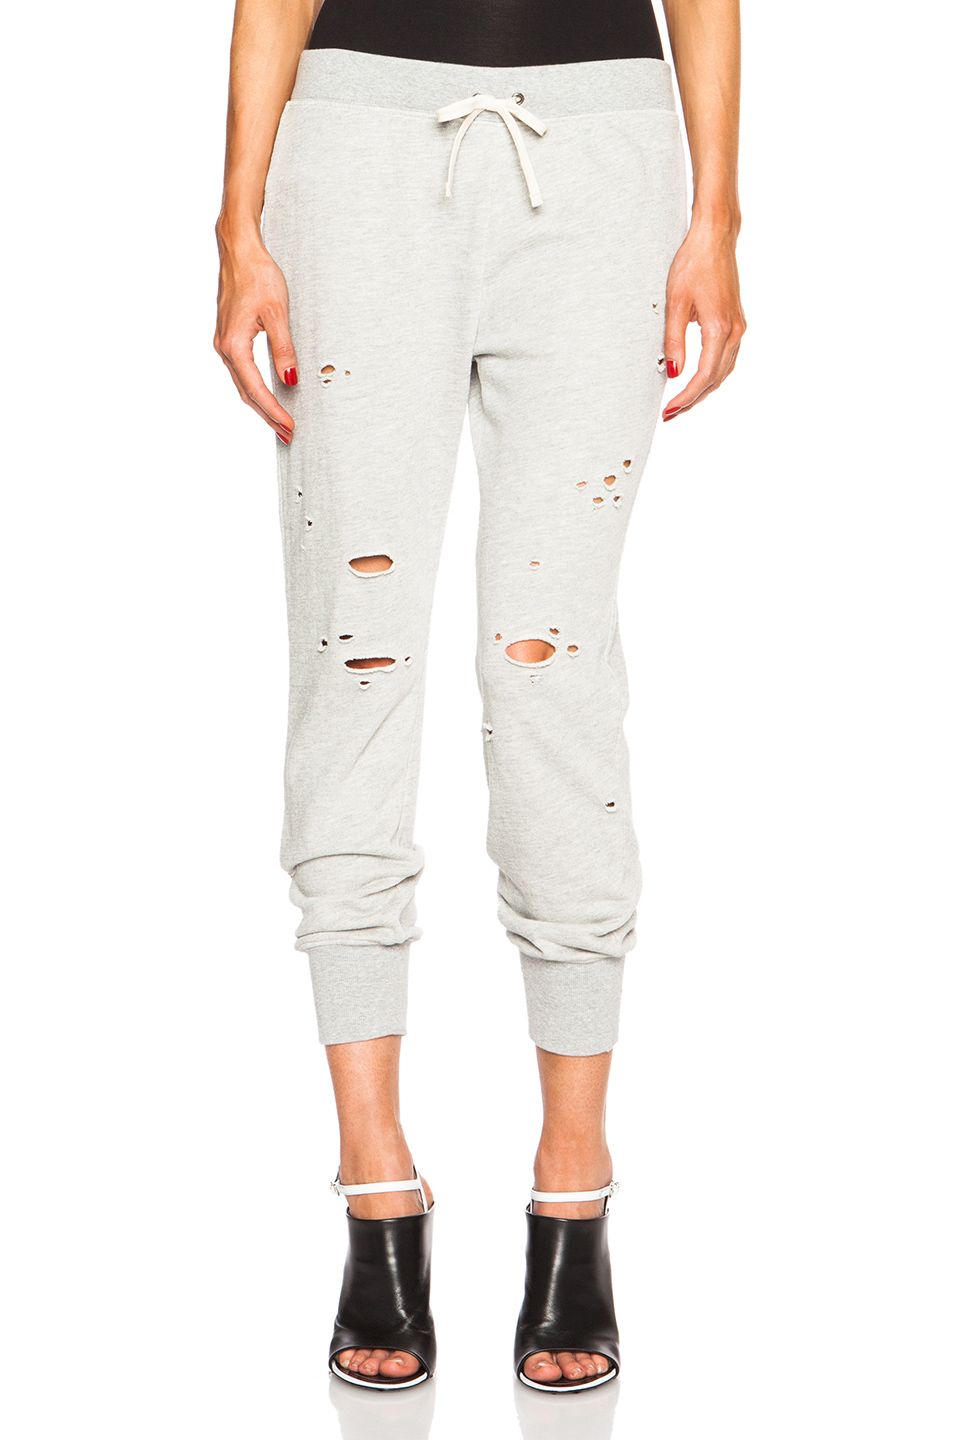 Lyst - Pam & Gela Betsee Distressed Sweatpants in Gray